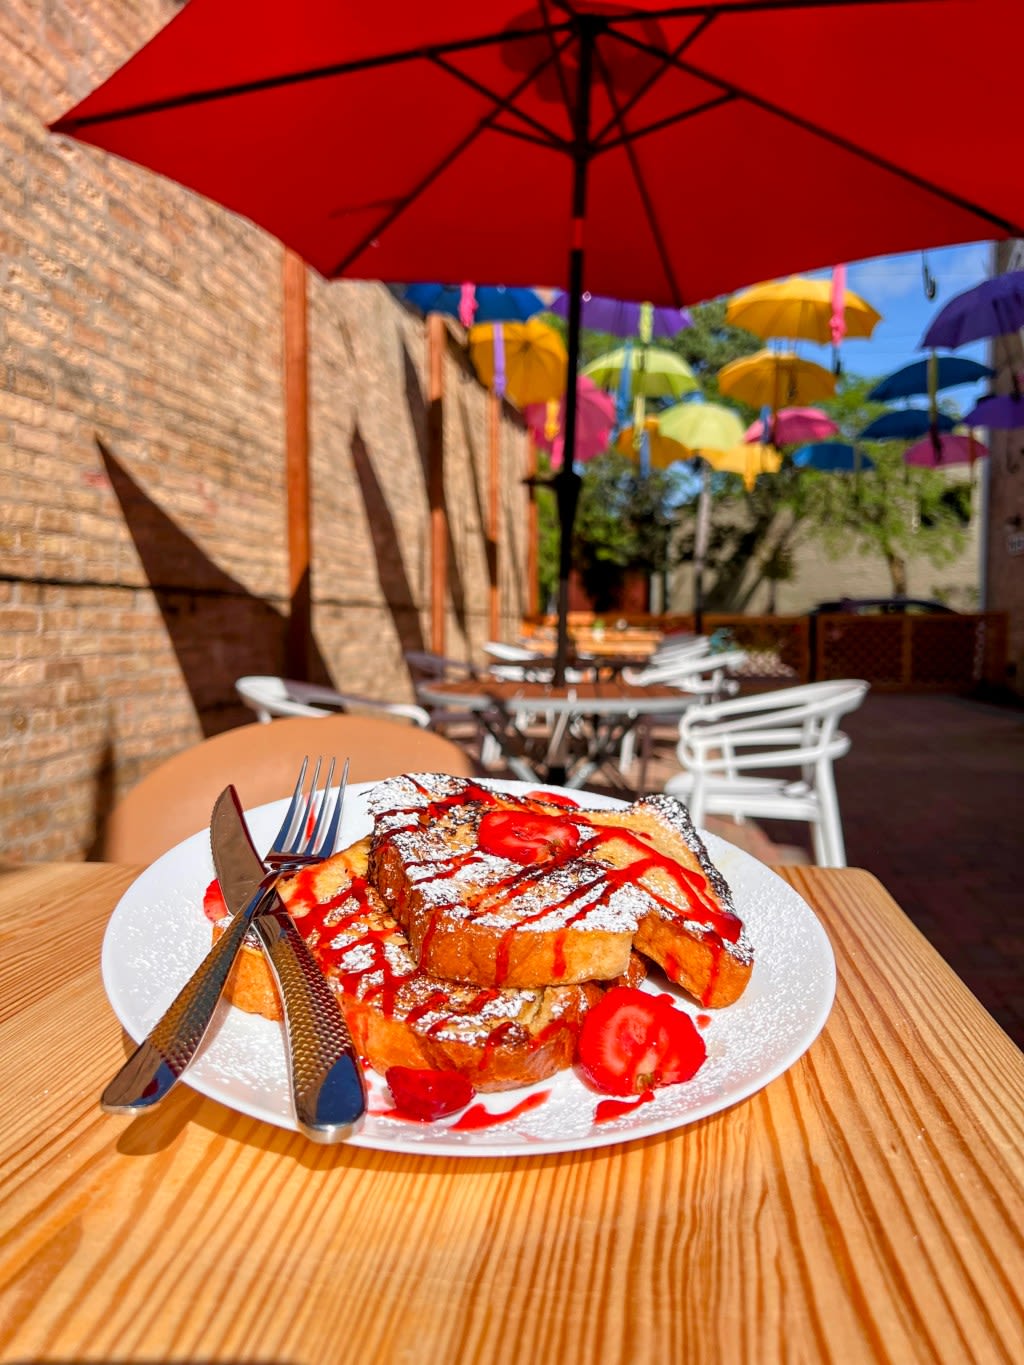 Skokie restaurant opens, features Guatemalan, American breakfasts, mimosas, live music